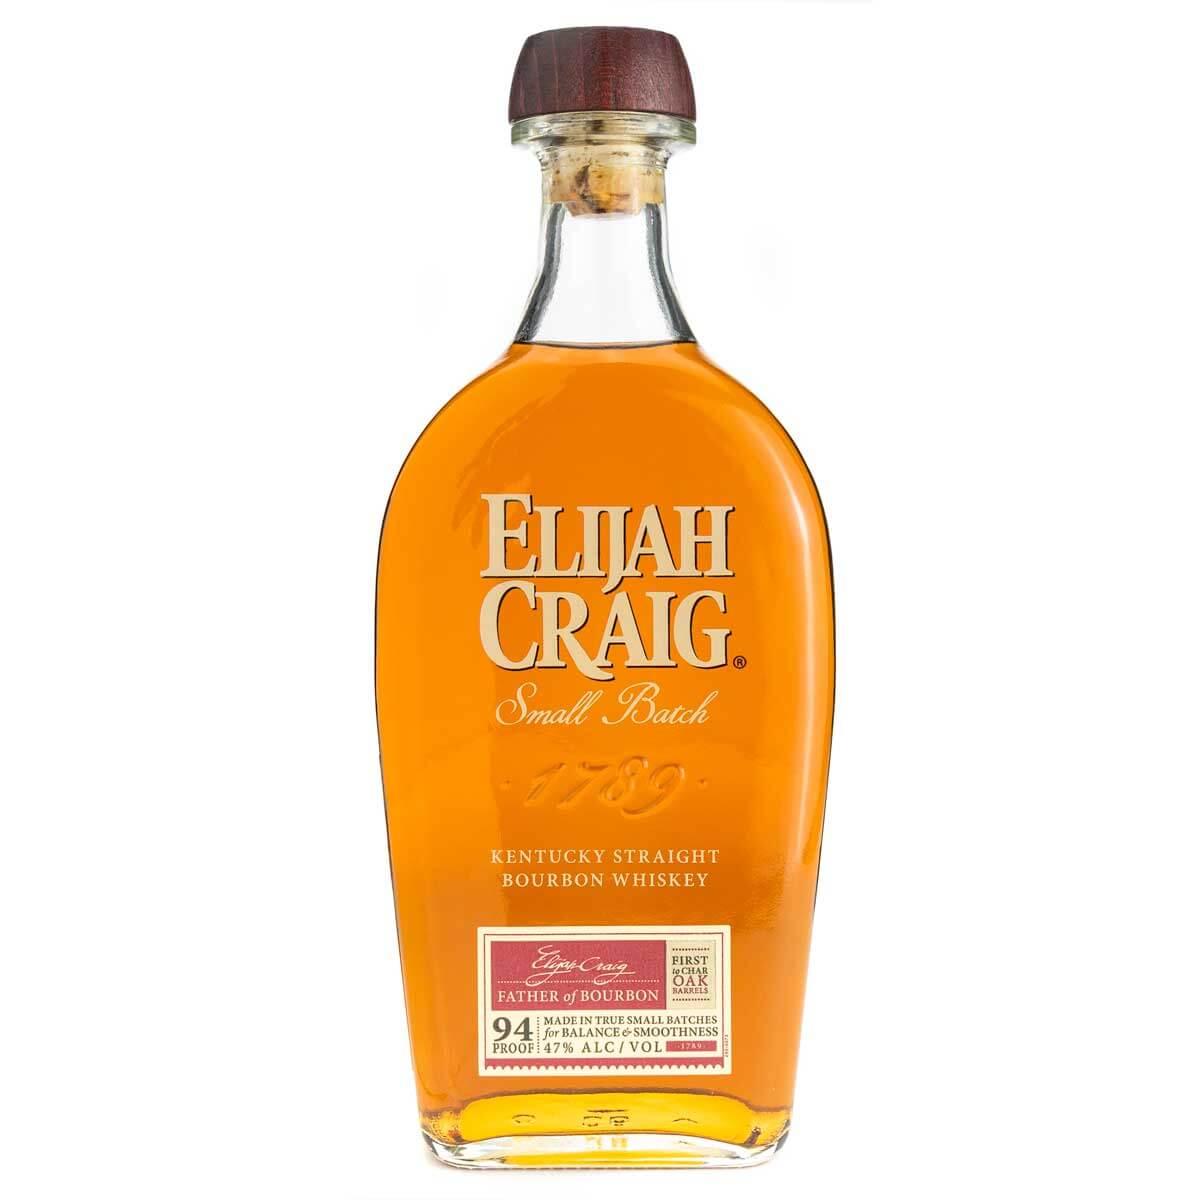 Elijah Craig Small Batch Bourbon bottle